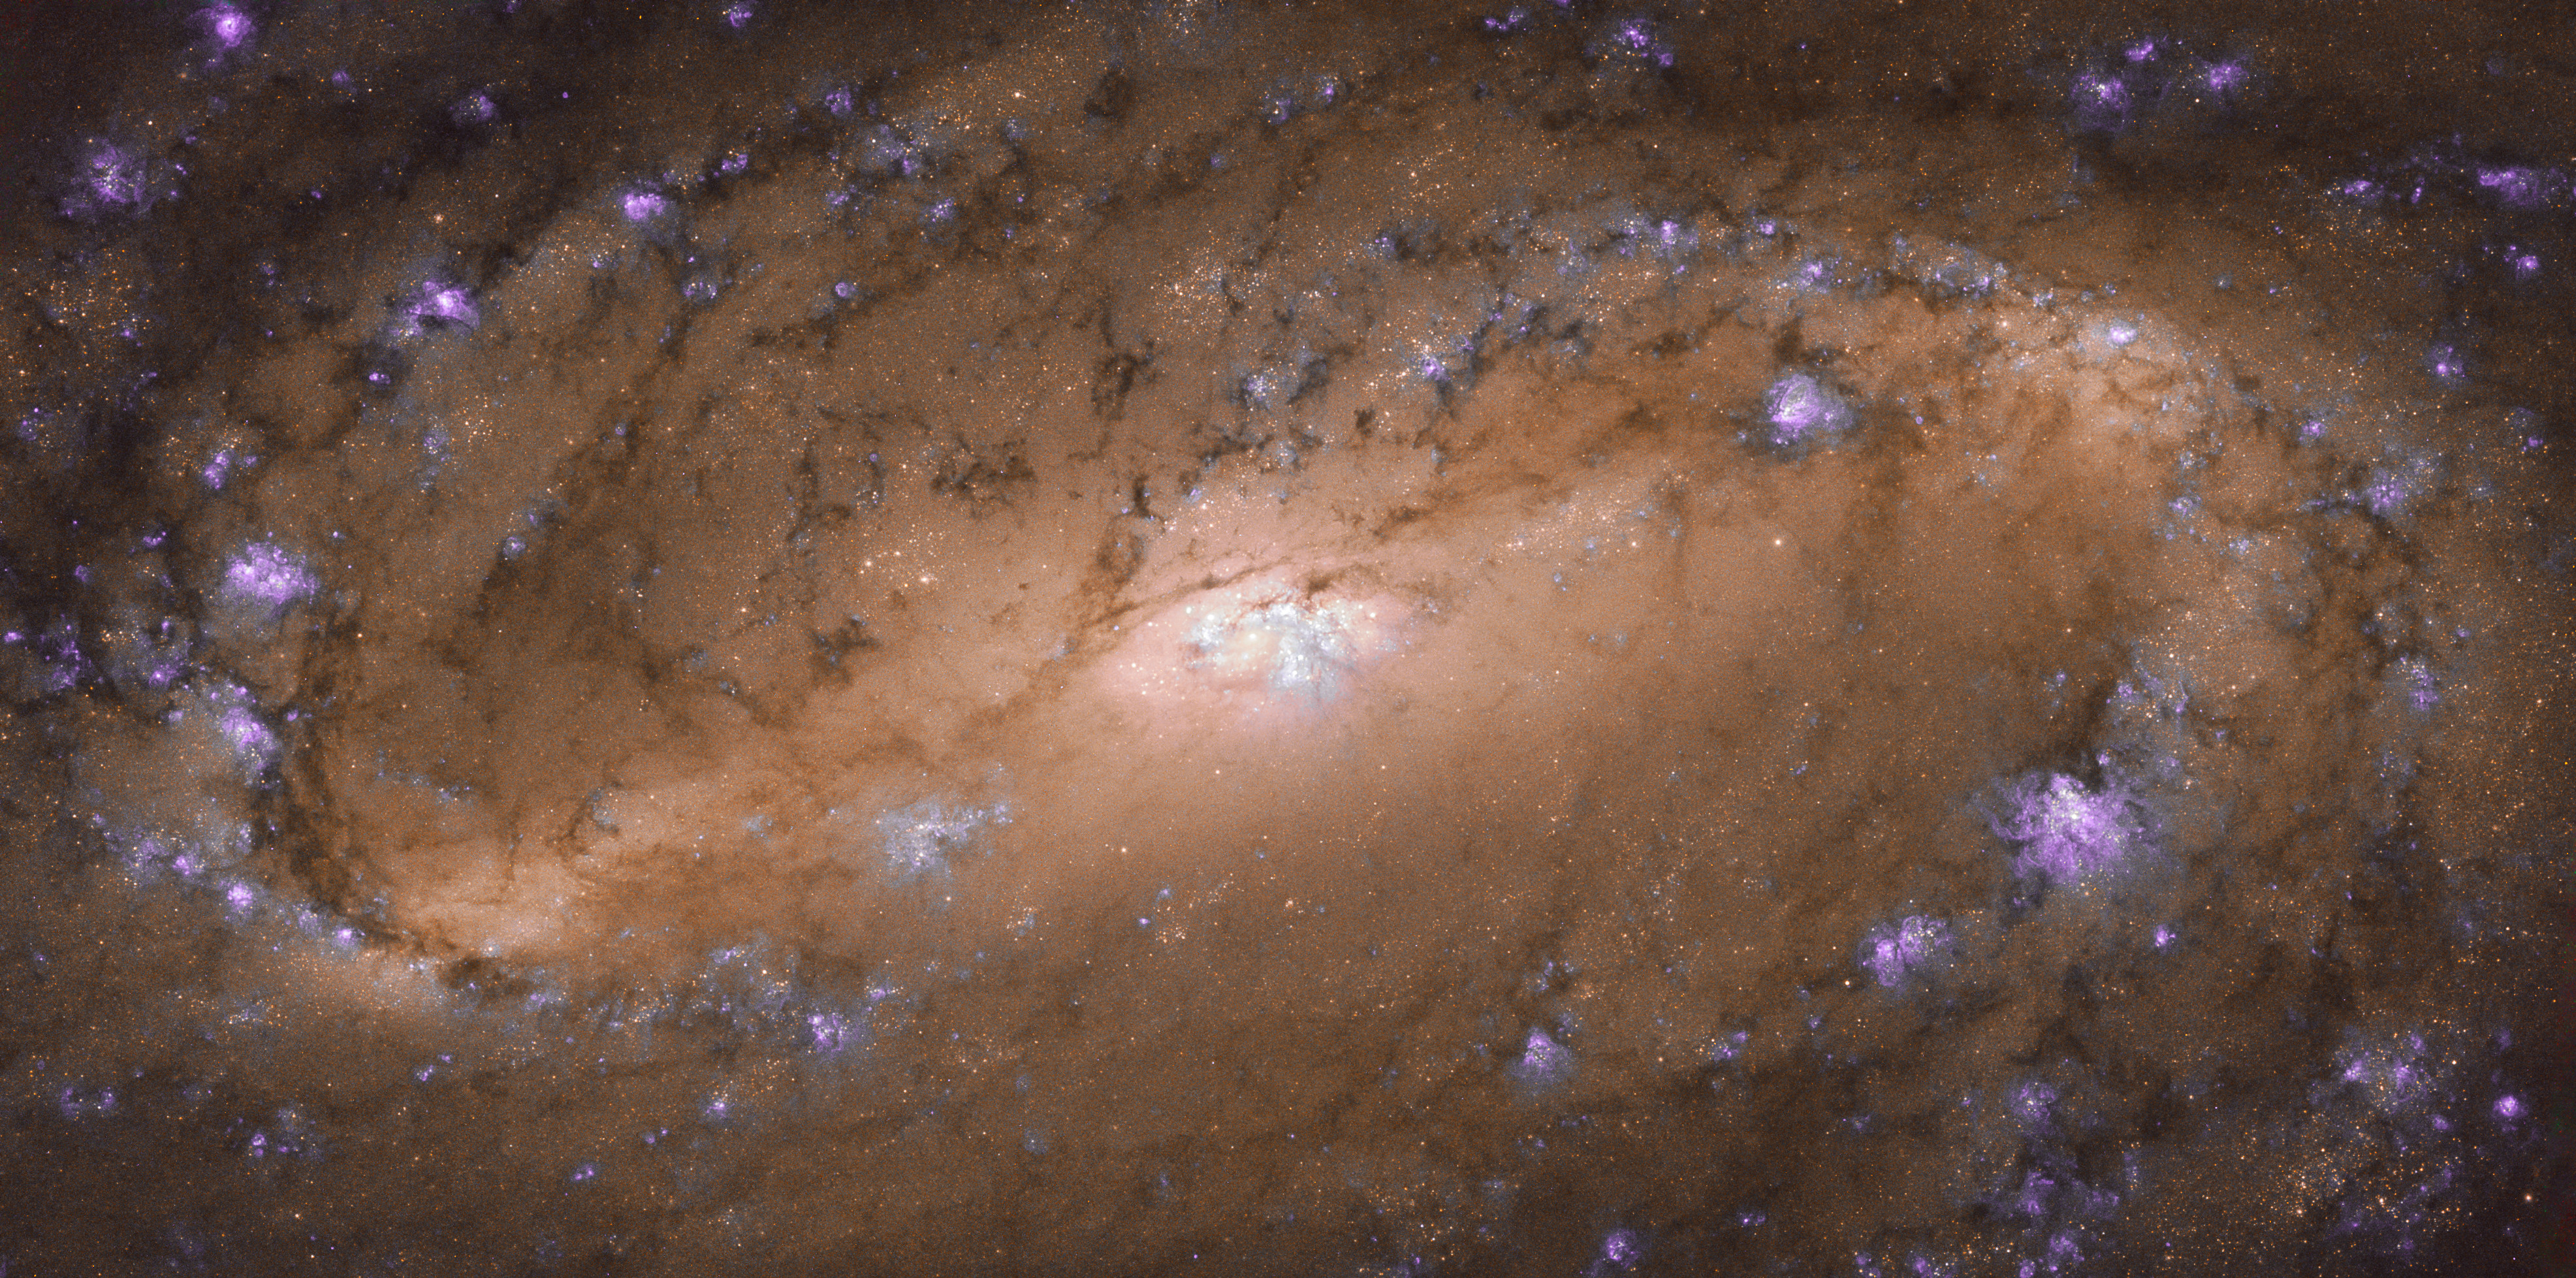 General 3945x1957 space NASA universe galaxy Hubble stars digital art space art Hubble Deep Field